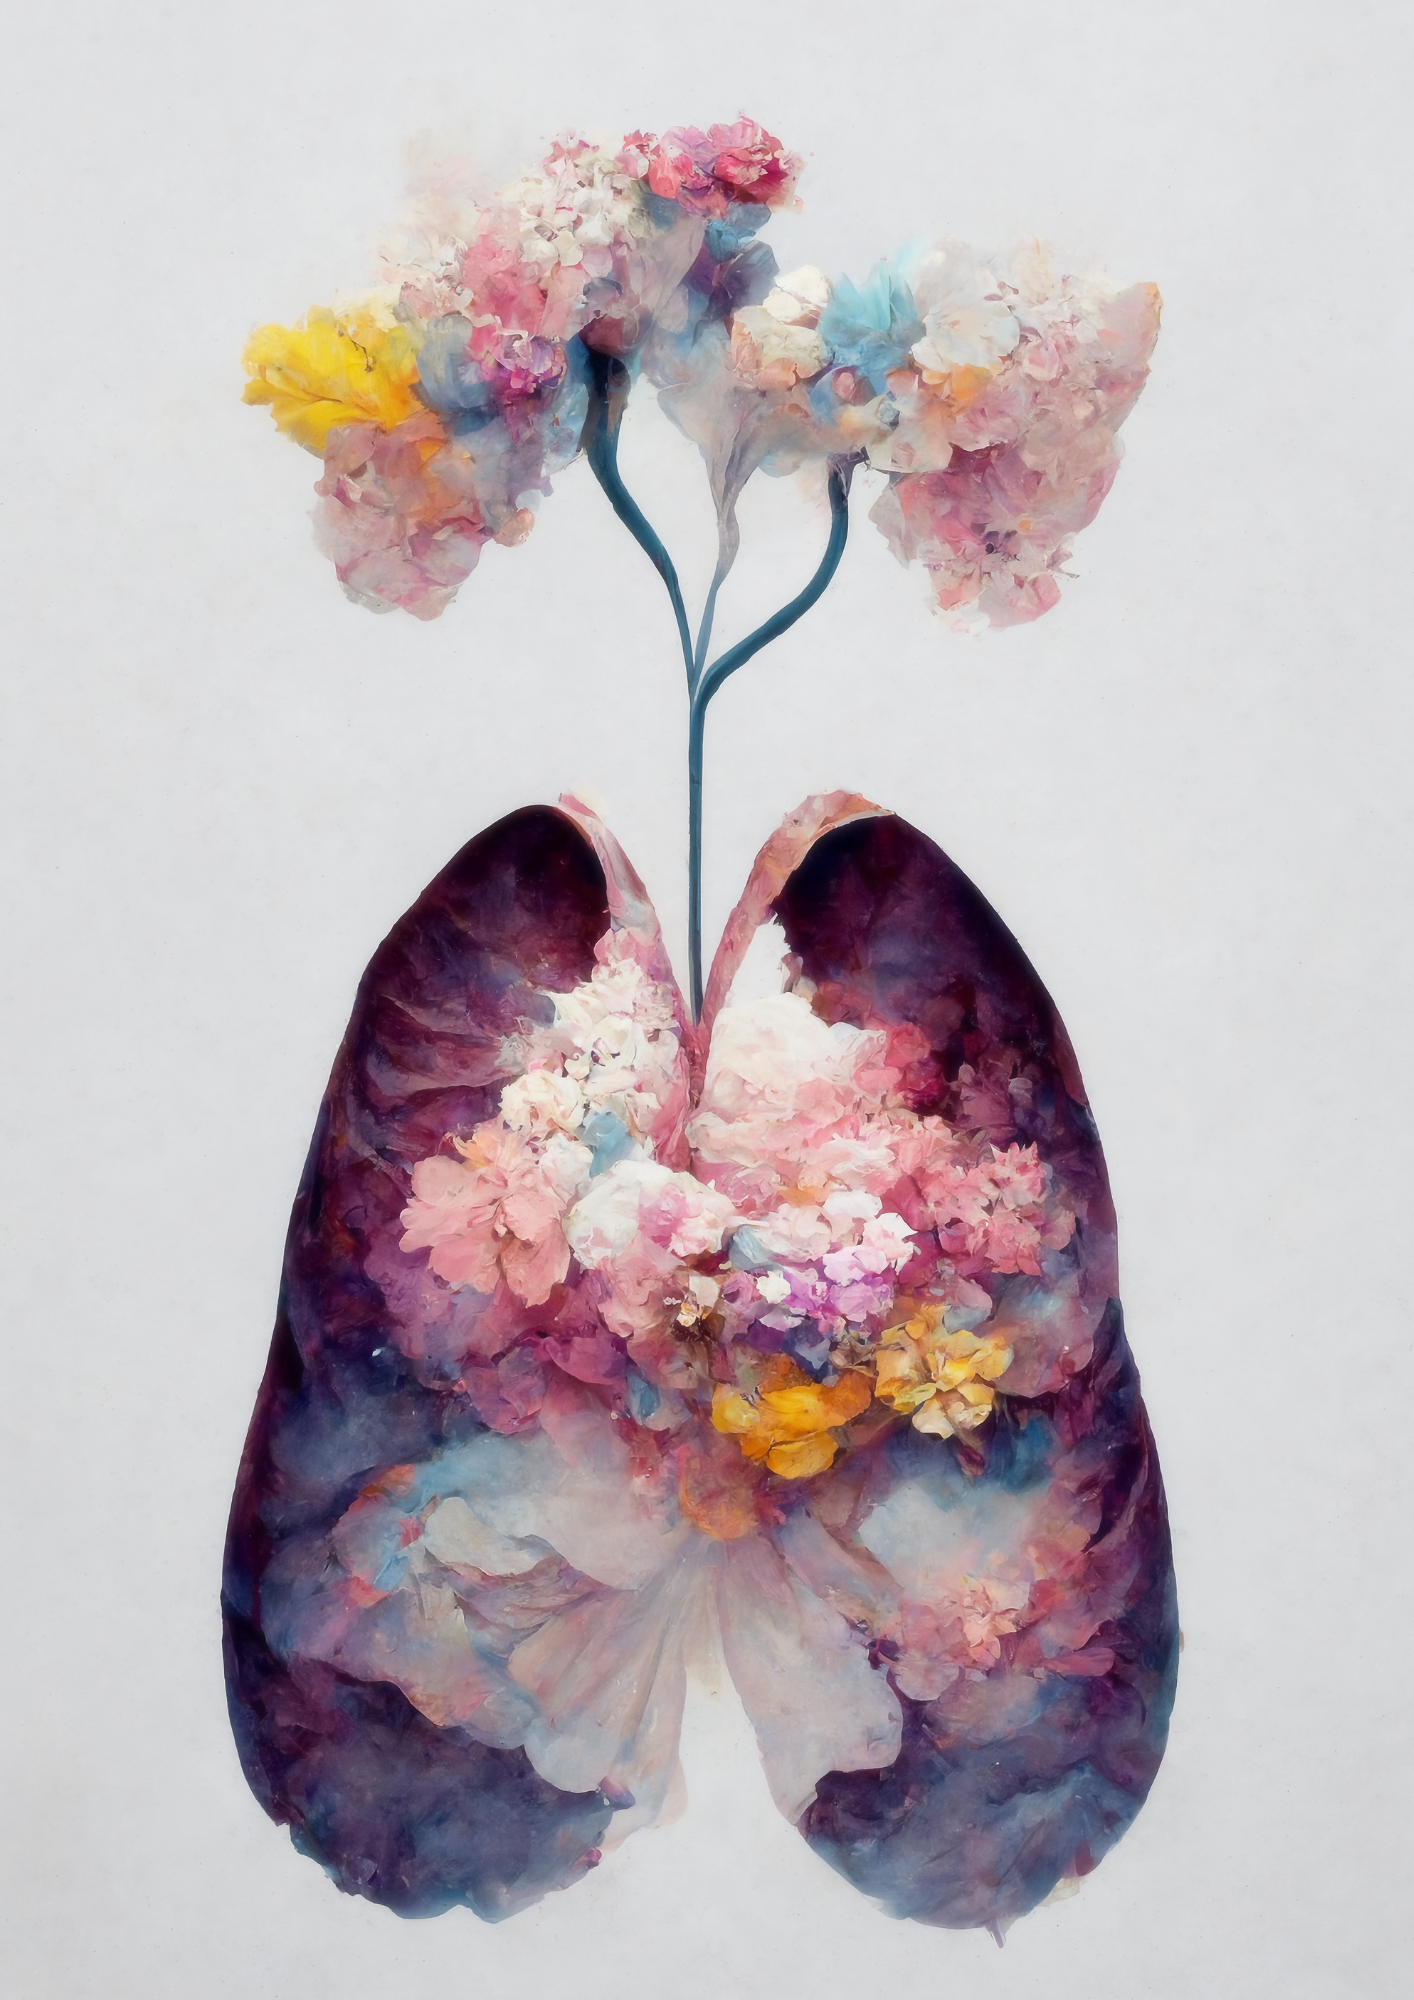 Respirar permite florecer